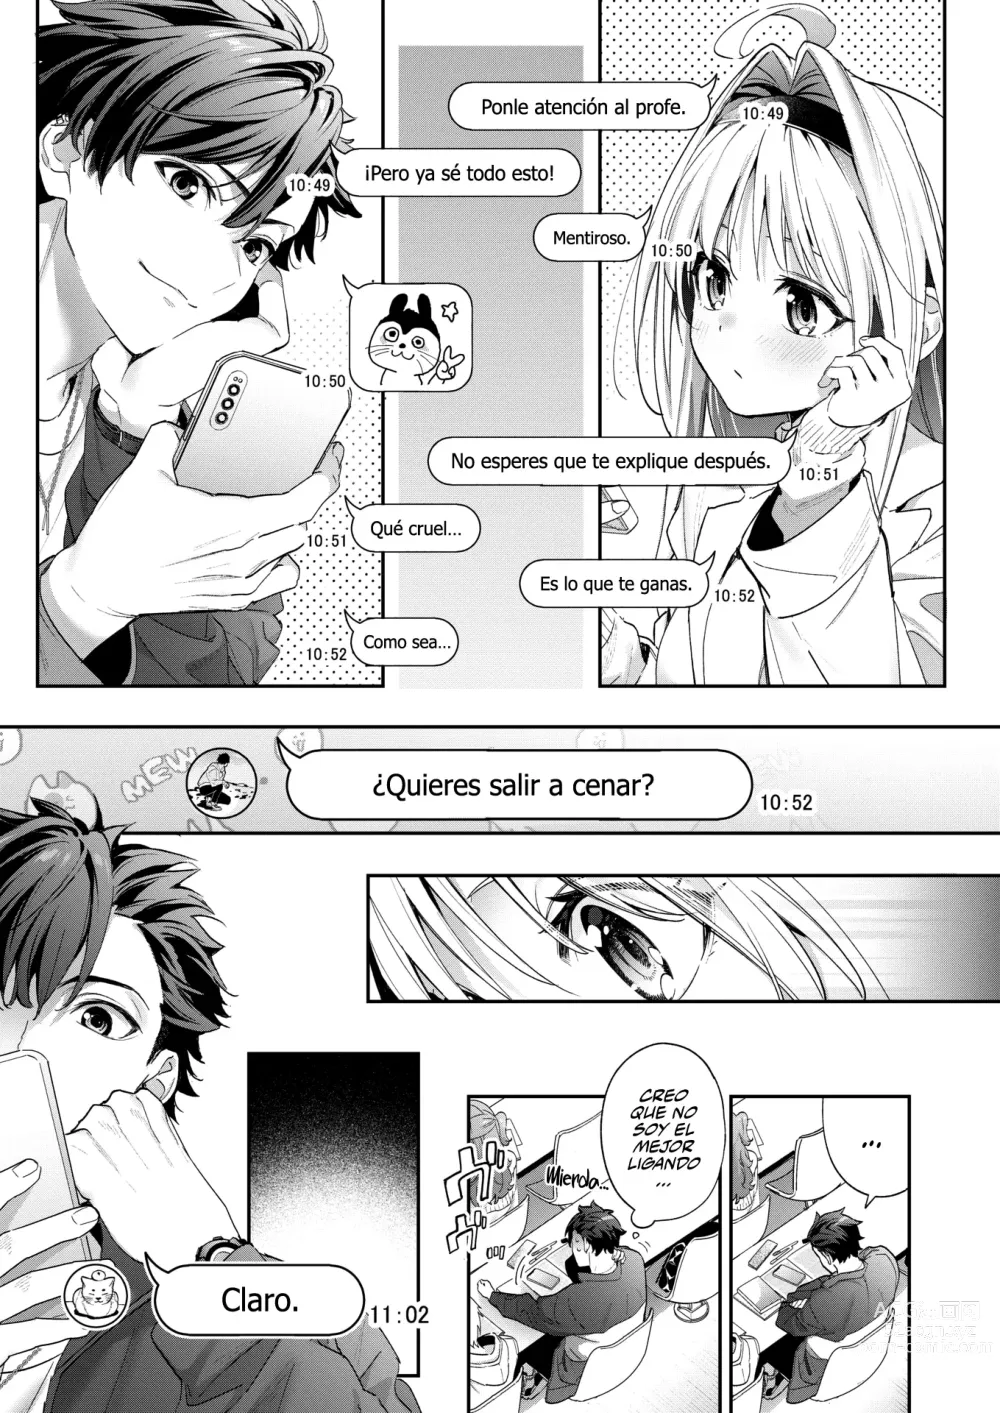 Page 5 of manga Melting Snow